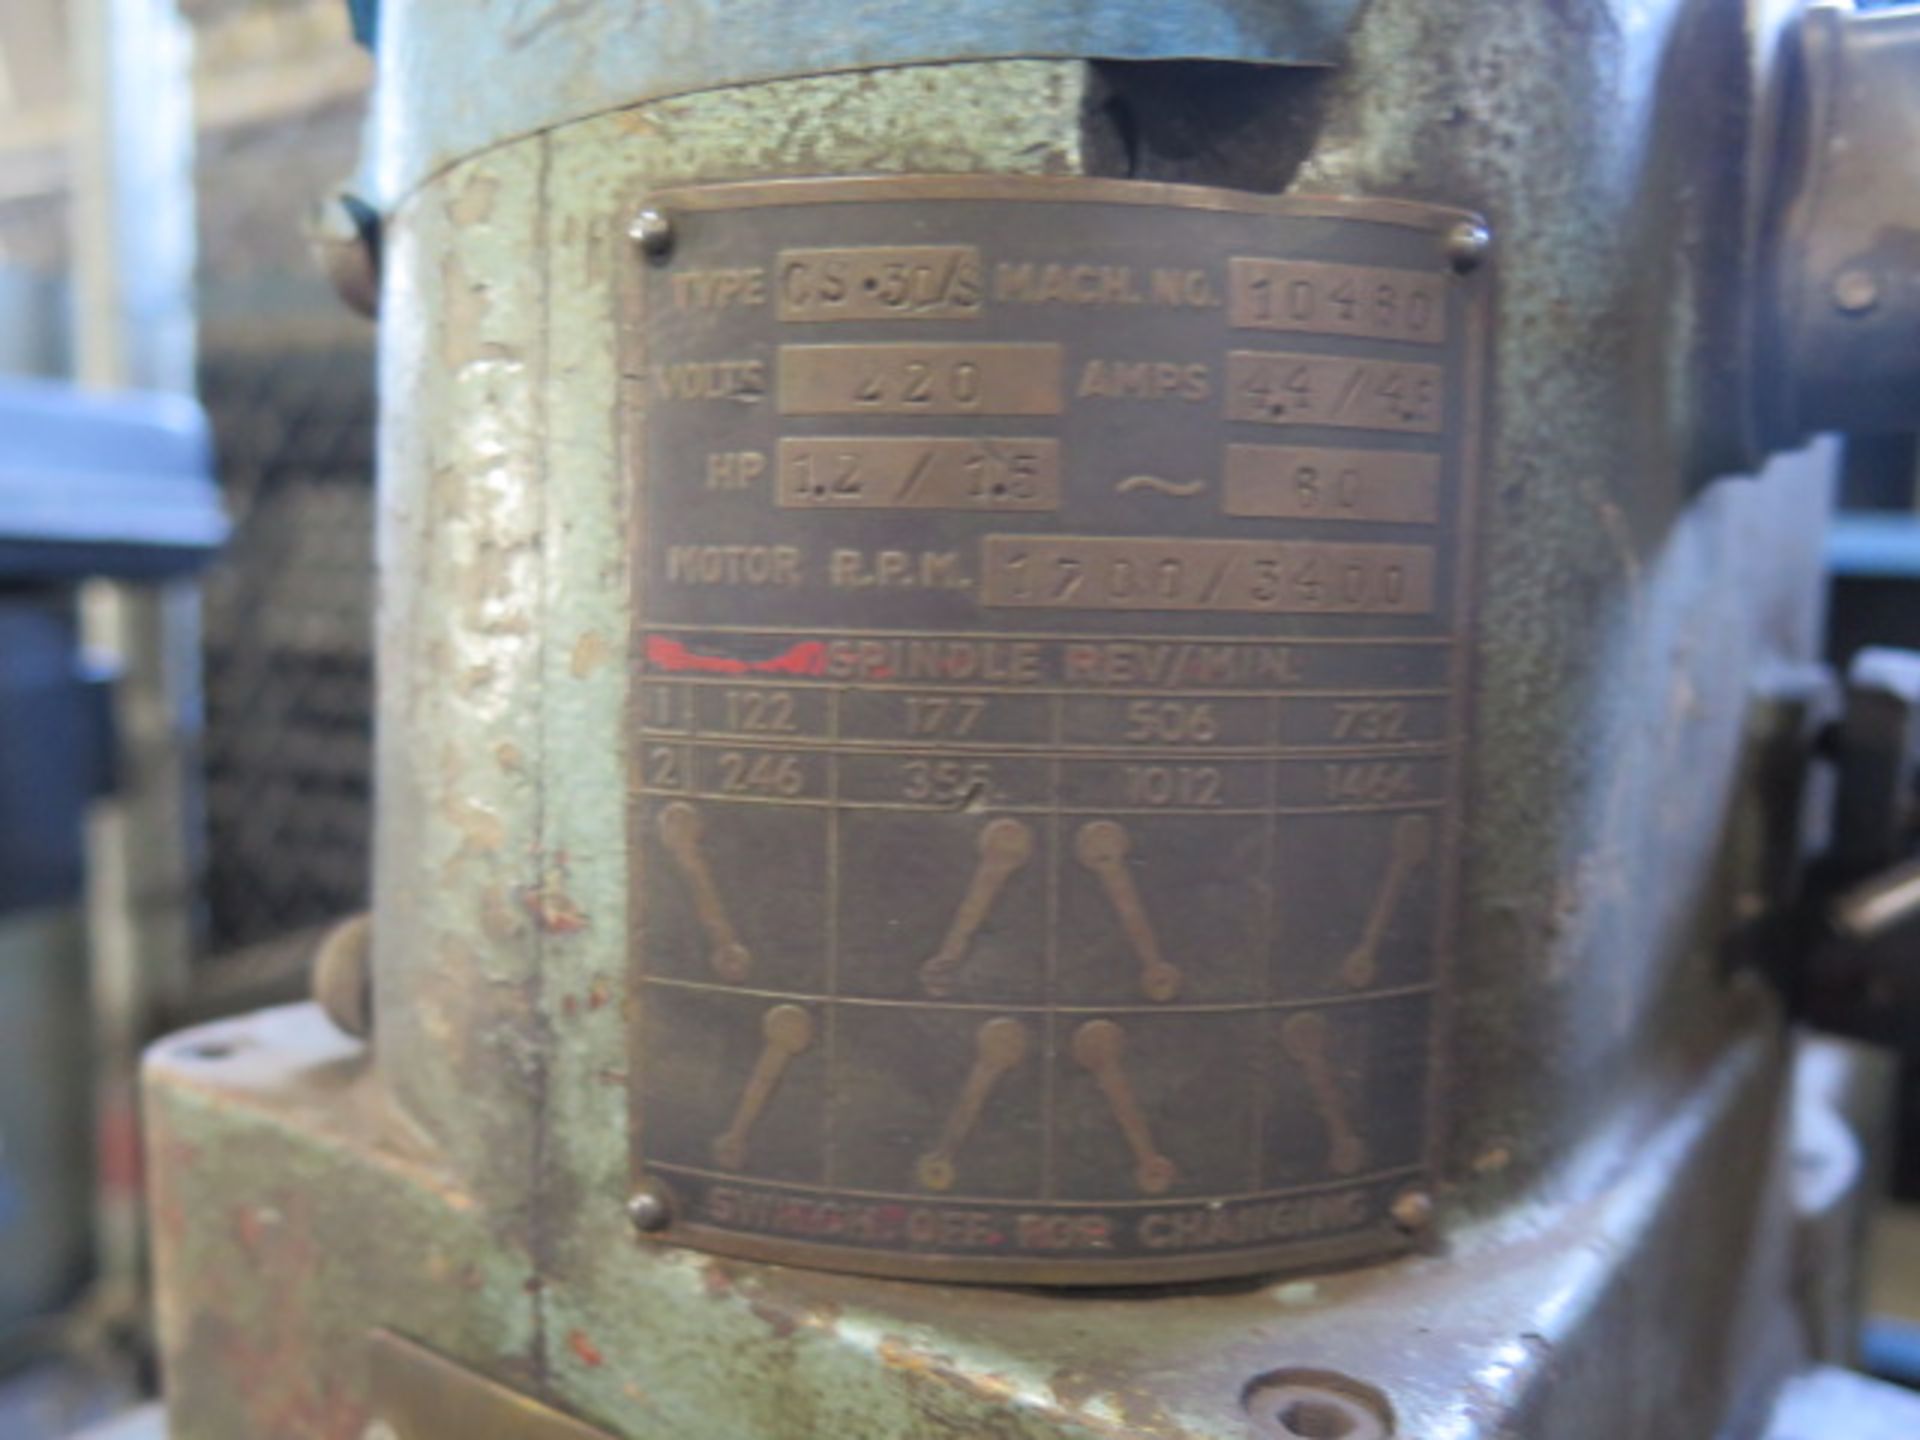 Boice Type CS-30/S Geared Head Pedestal Drill Press w/ 122-1464 RPM (SOLD AS-IS - NO WARRANTY) - Image 8 of 8